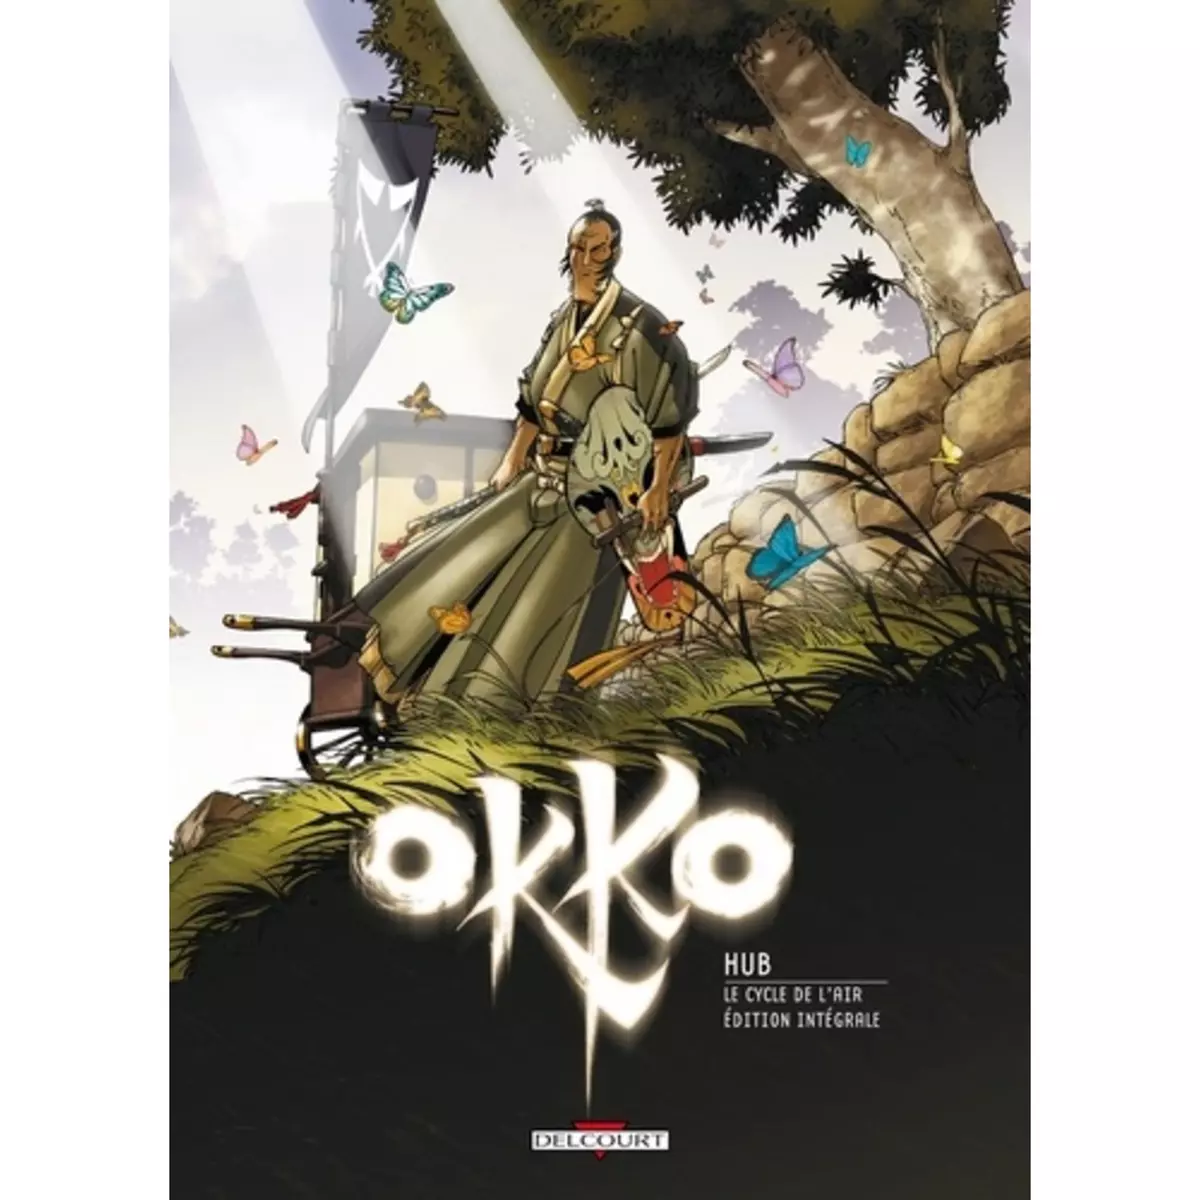  OKKO TOME 5 ET 6 : LE CYCLE DE L'AIR, Hub